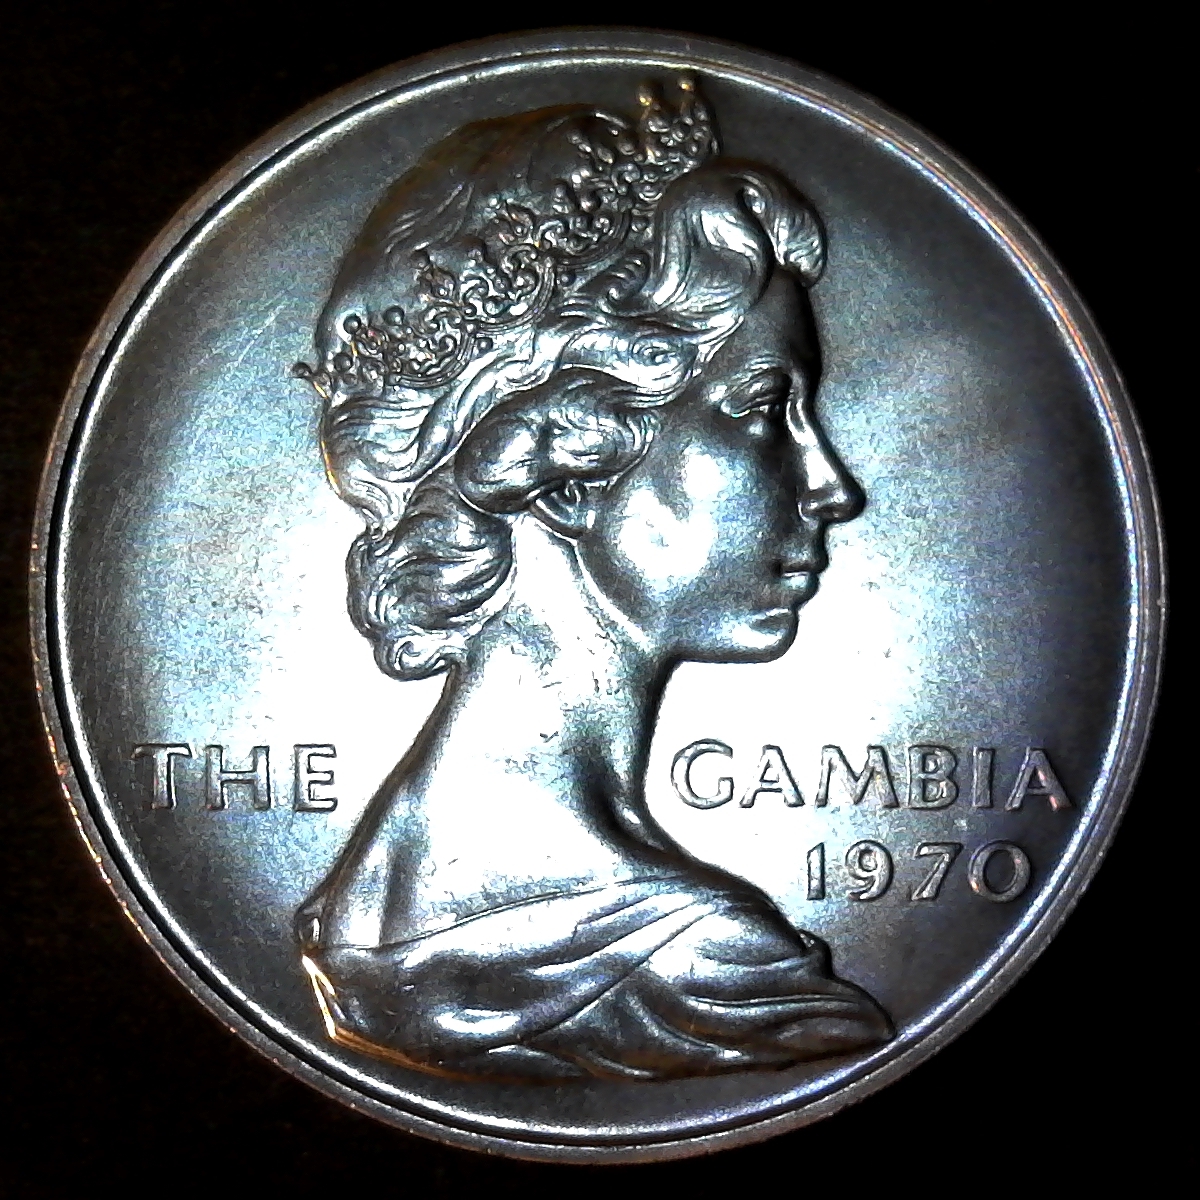 Gambia 8 Shillings 1970 reverse.jpg